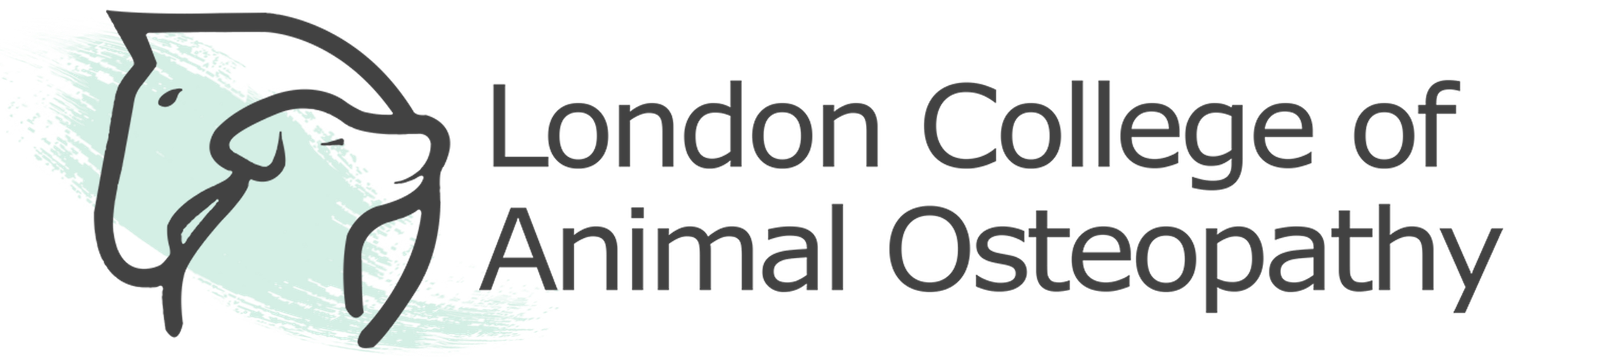 London College of Animal Osteopathy Logo